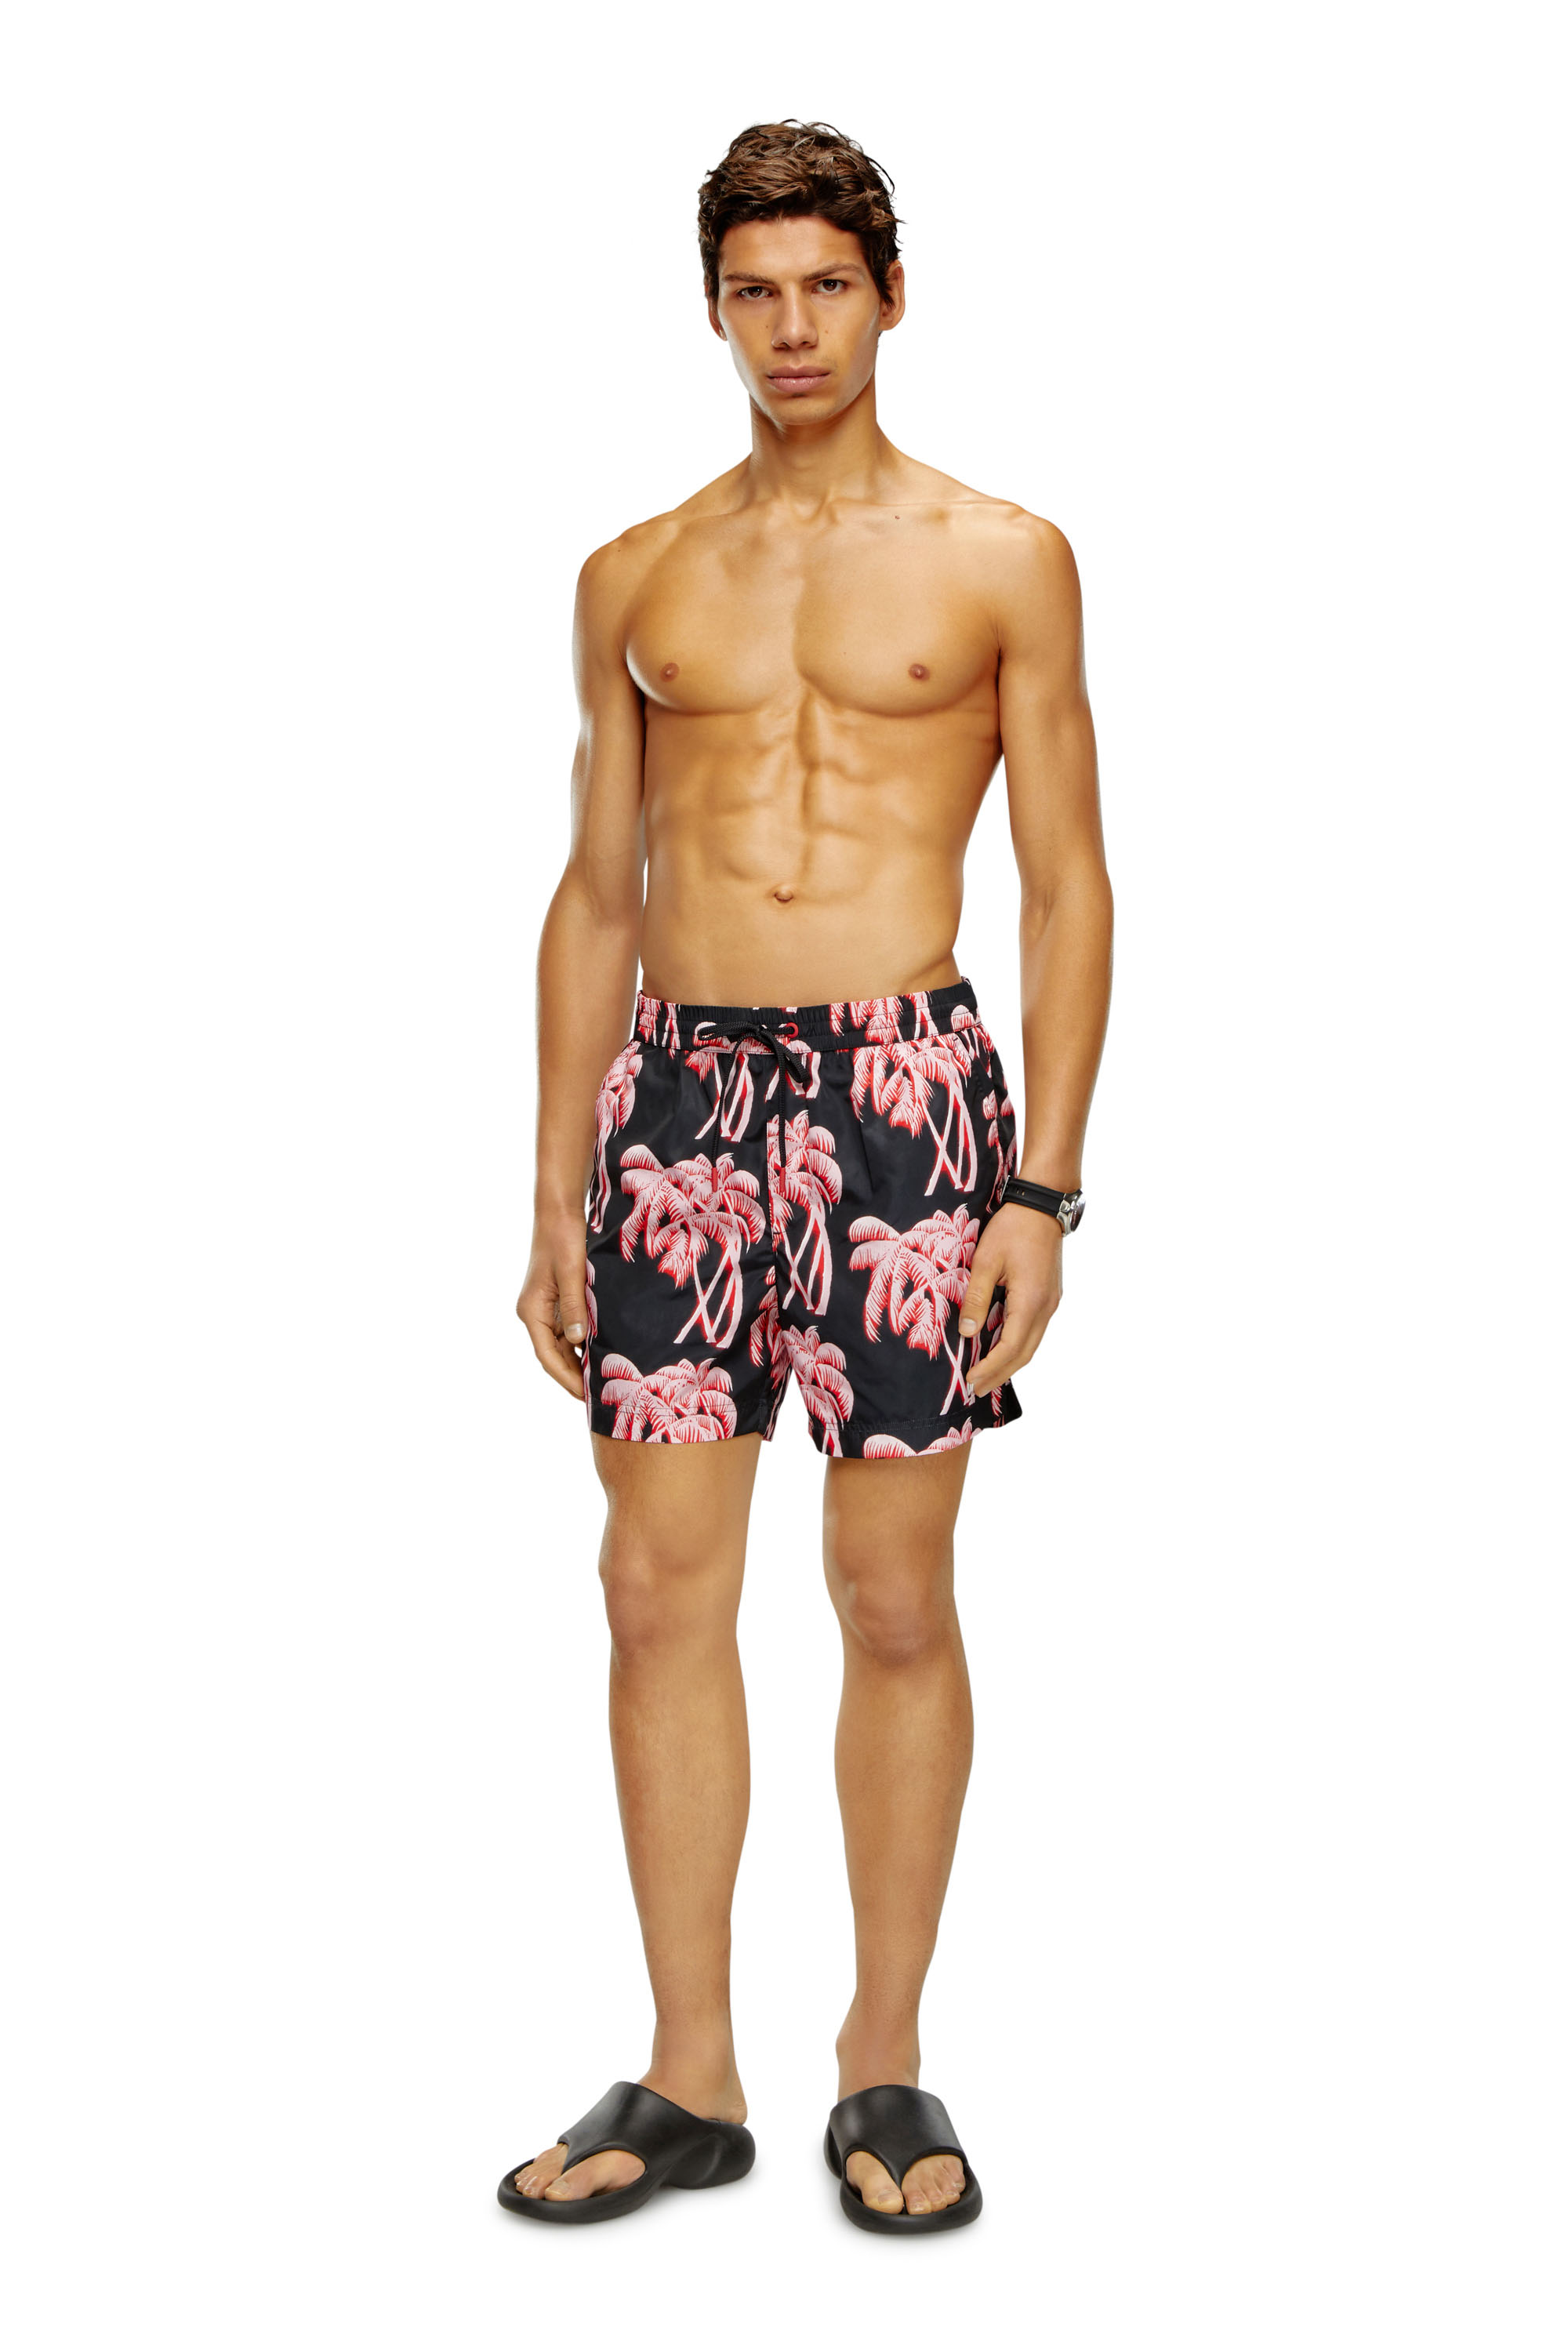 Men's Beachwear: Swimwear, Beach Towel